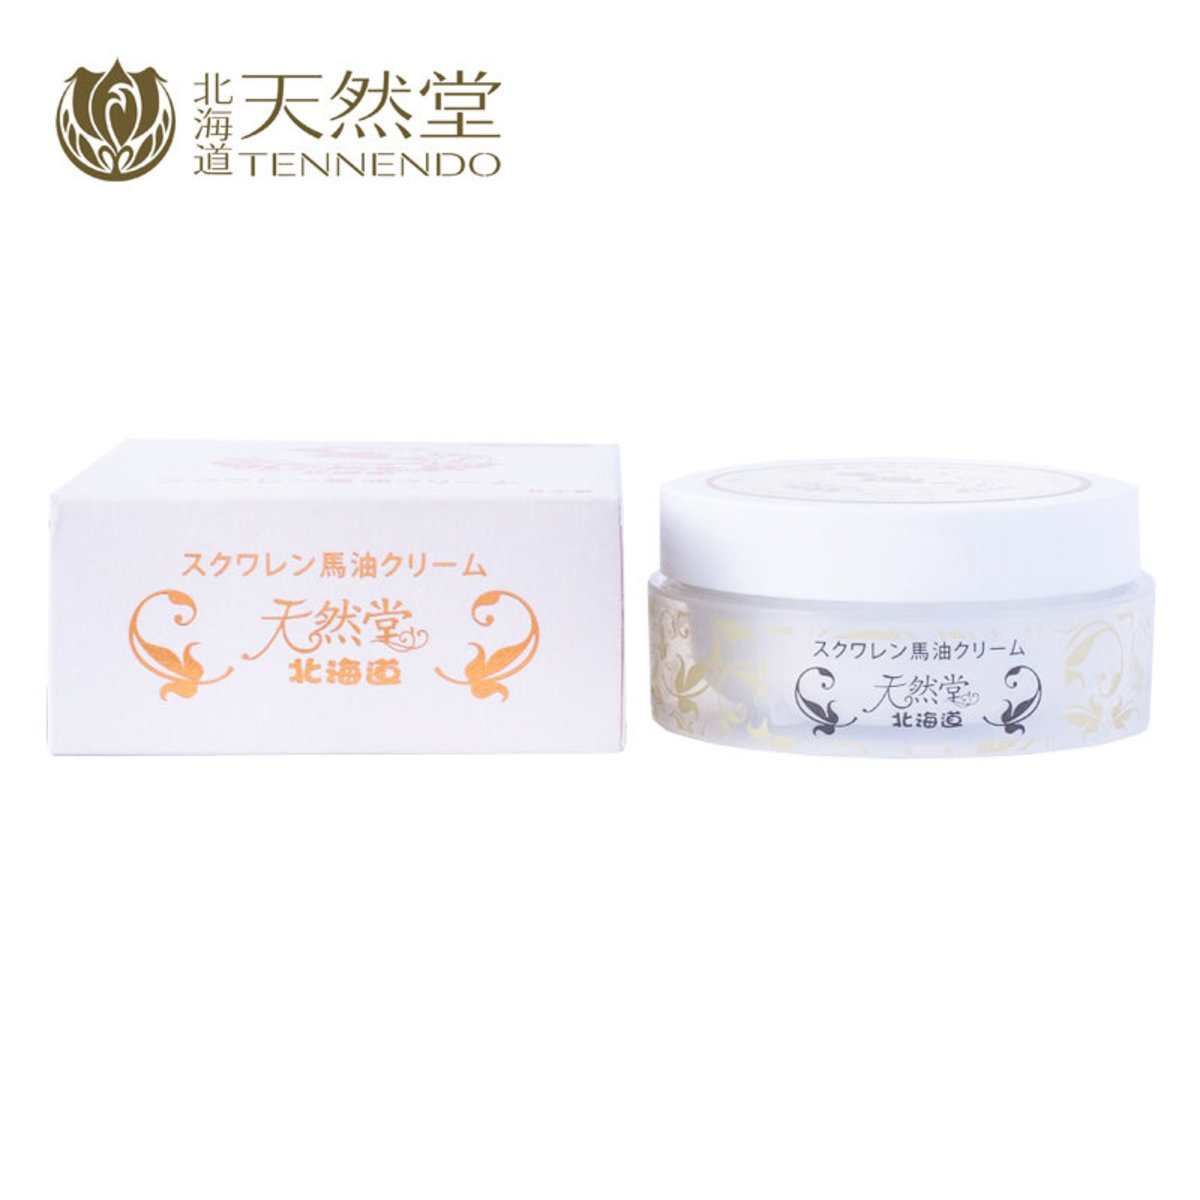 Horse Oil Facial Moisturizing Cream (Limited Edition) 80g